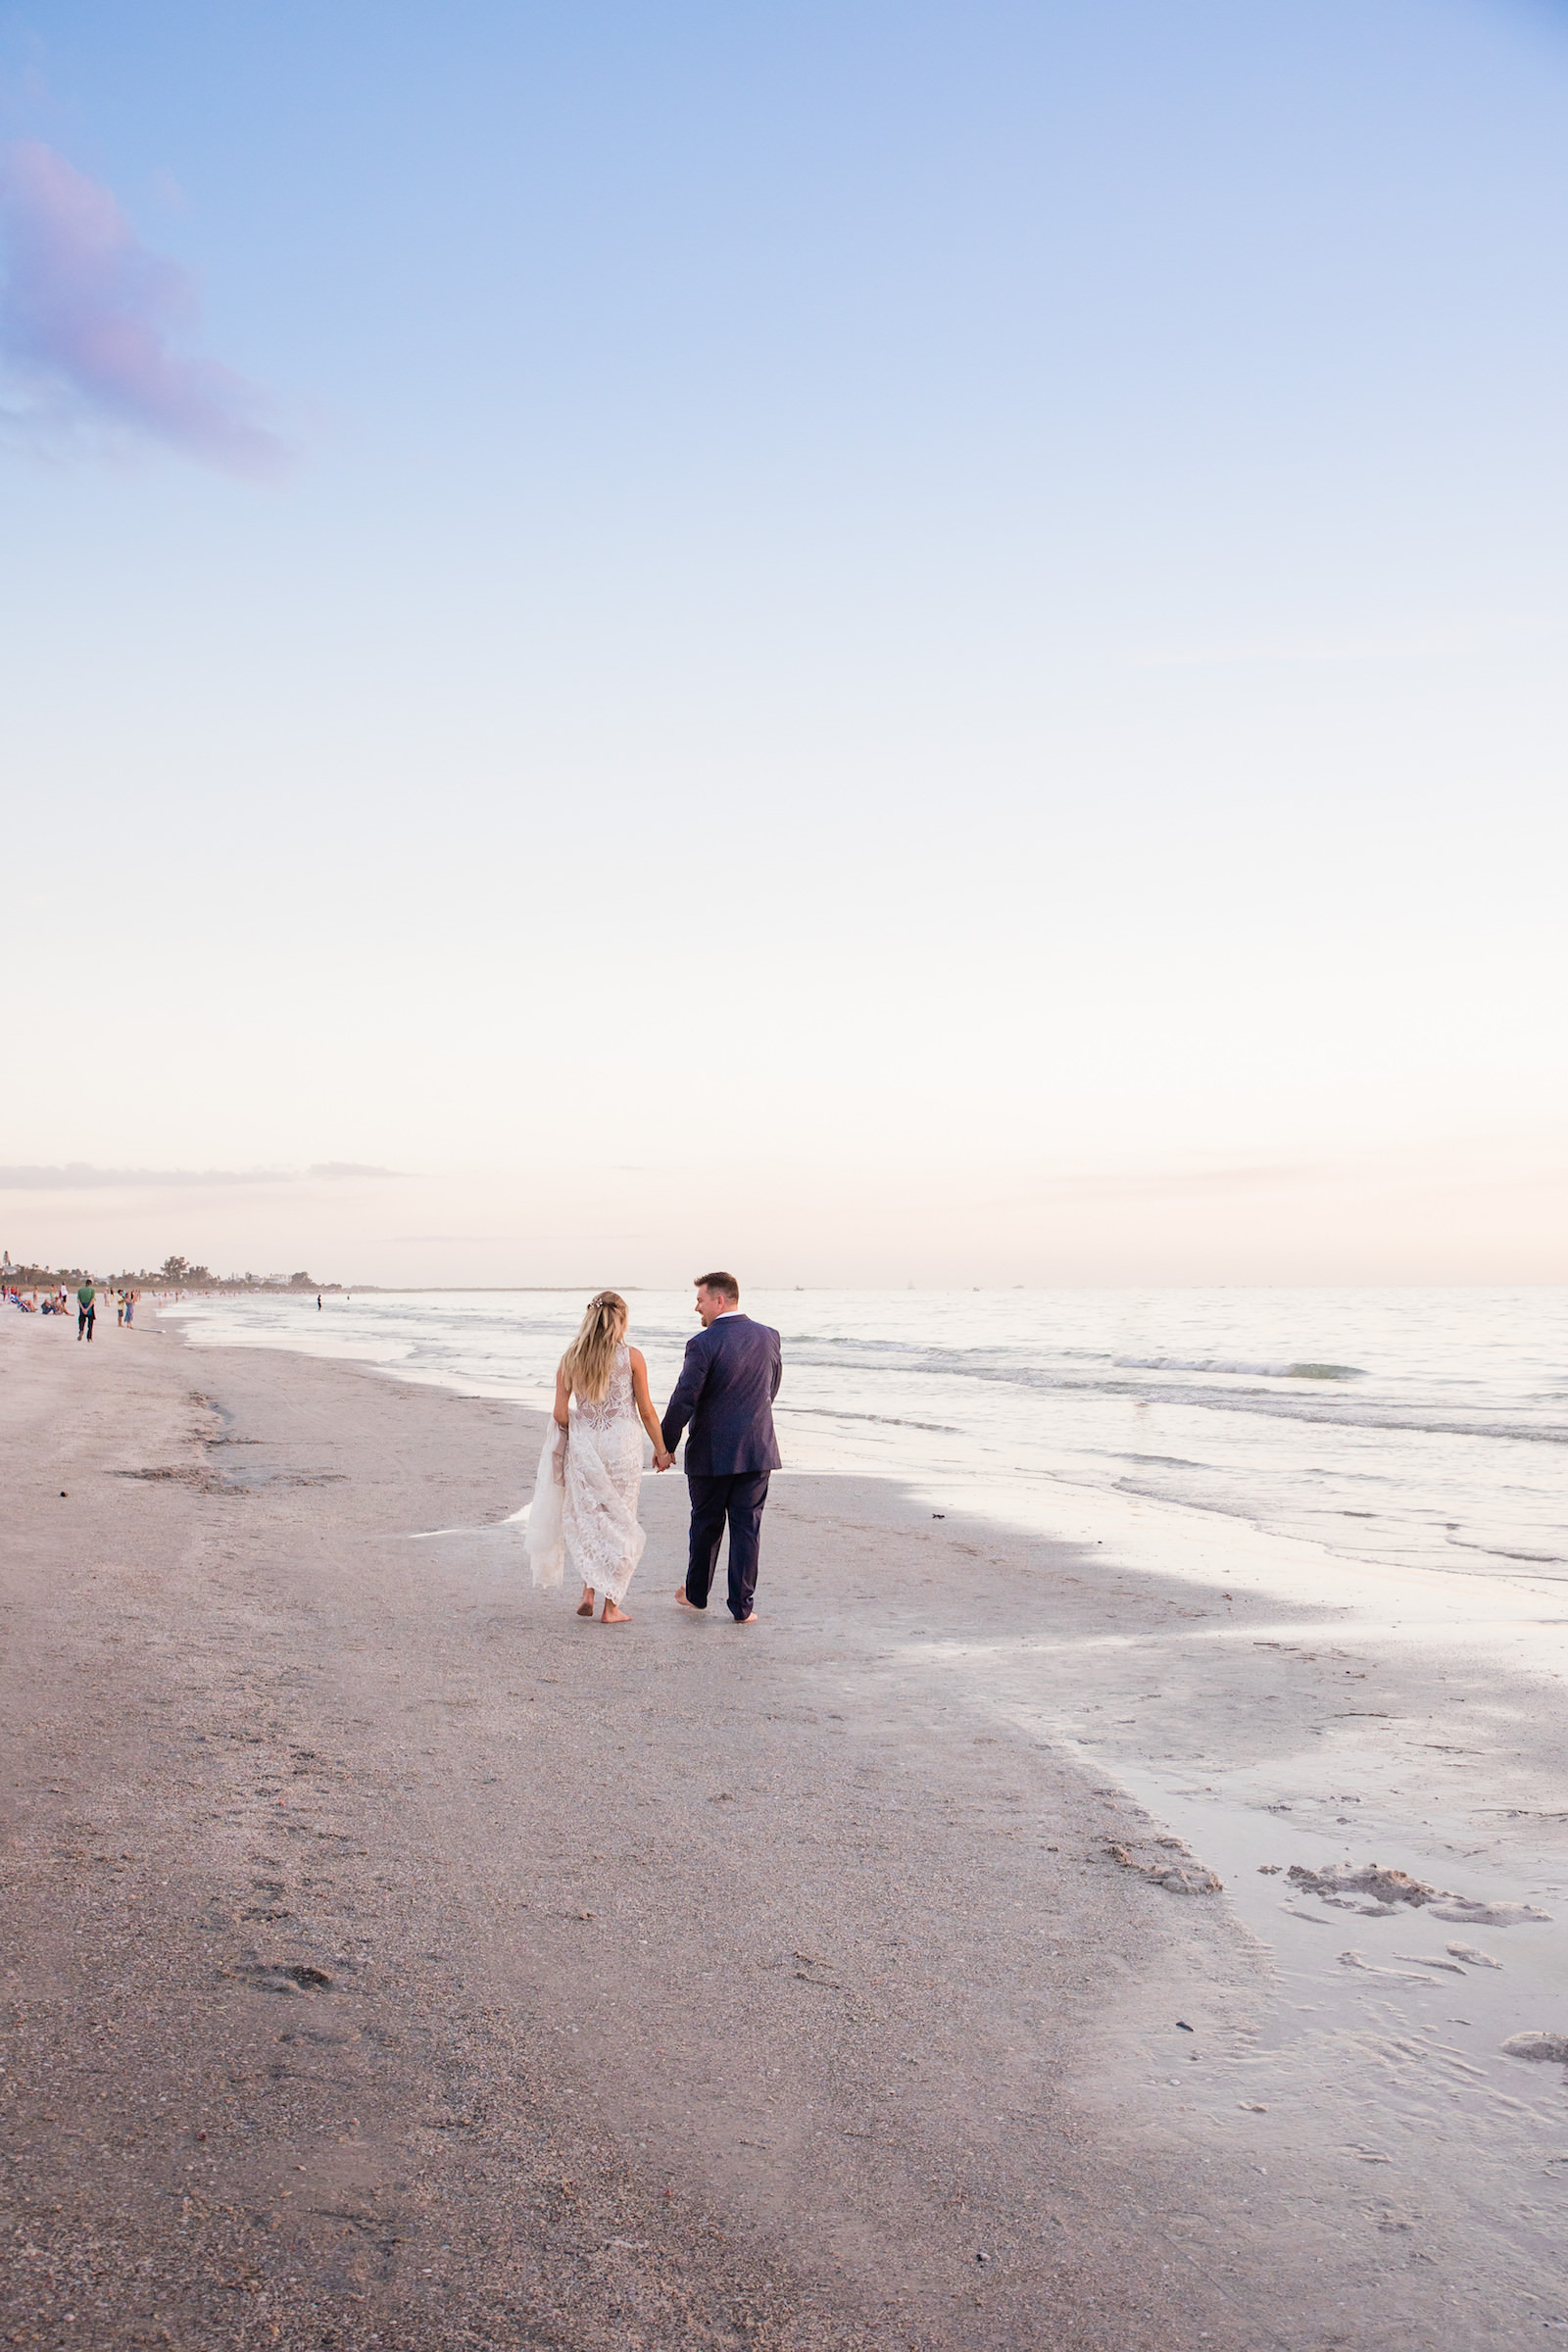 Florida Bride and Groom Walking on Beach Sunset Wedding Portrait